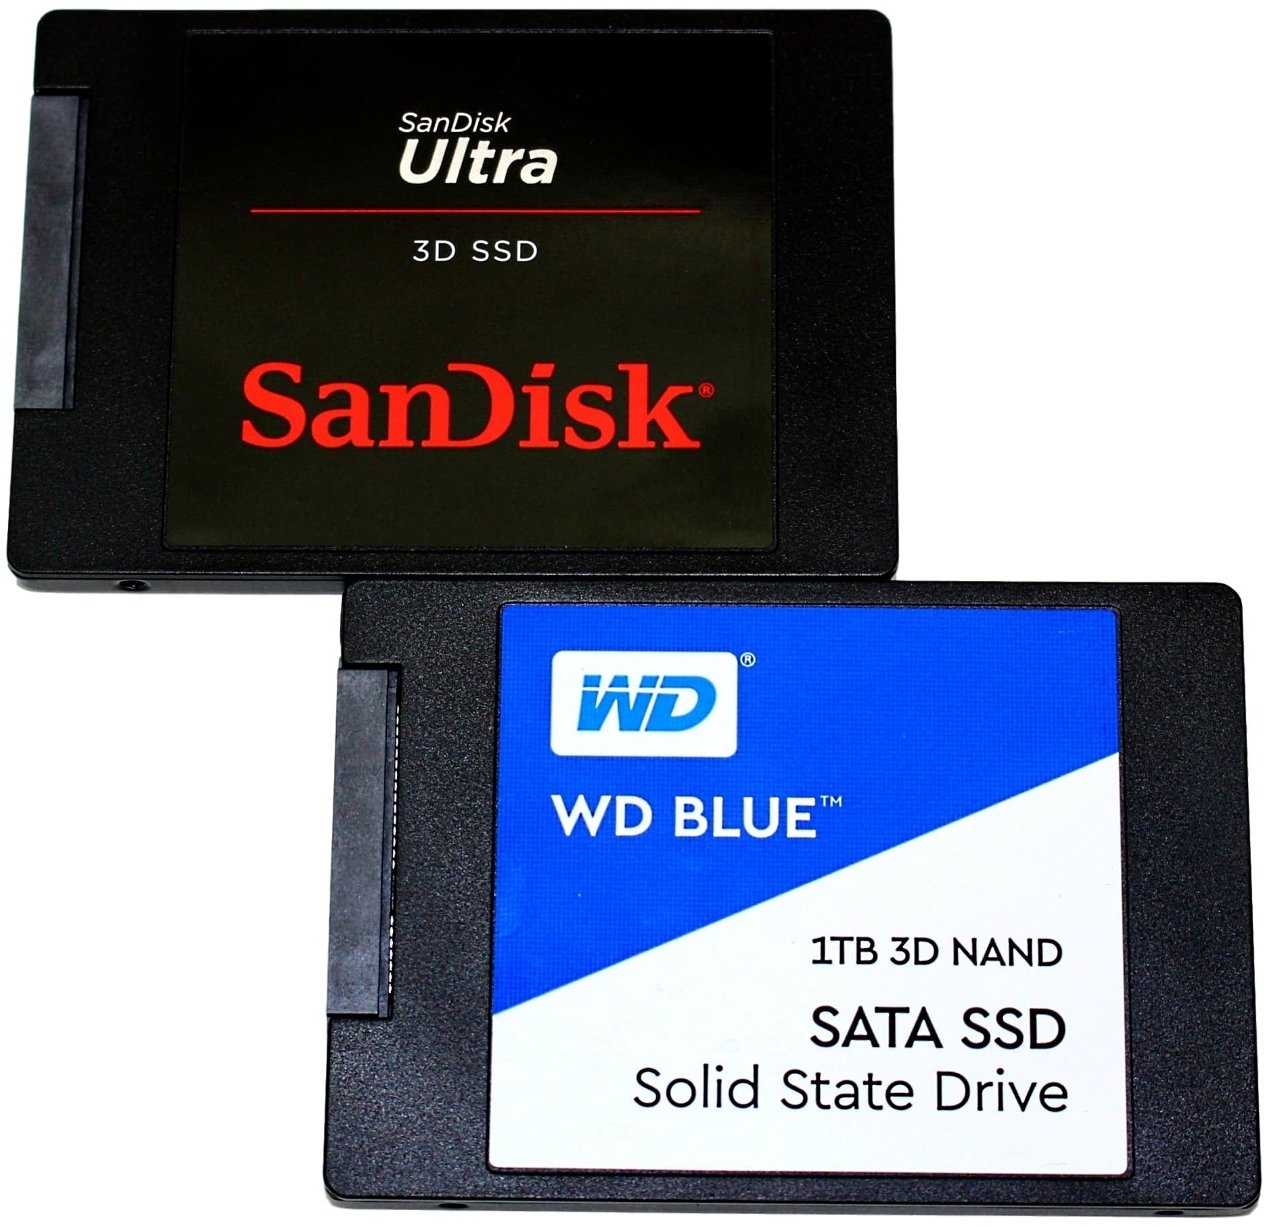 Ssd sandisk 1tb. SSD SANDISK Ultra. SSD WD Blue 512gb. SANDISK 4 TB. SSD SANDISK 1tb v2.